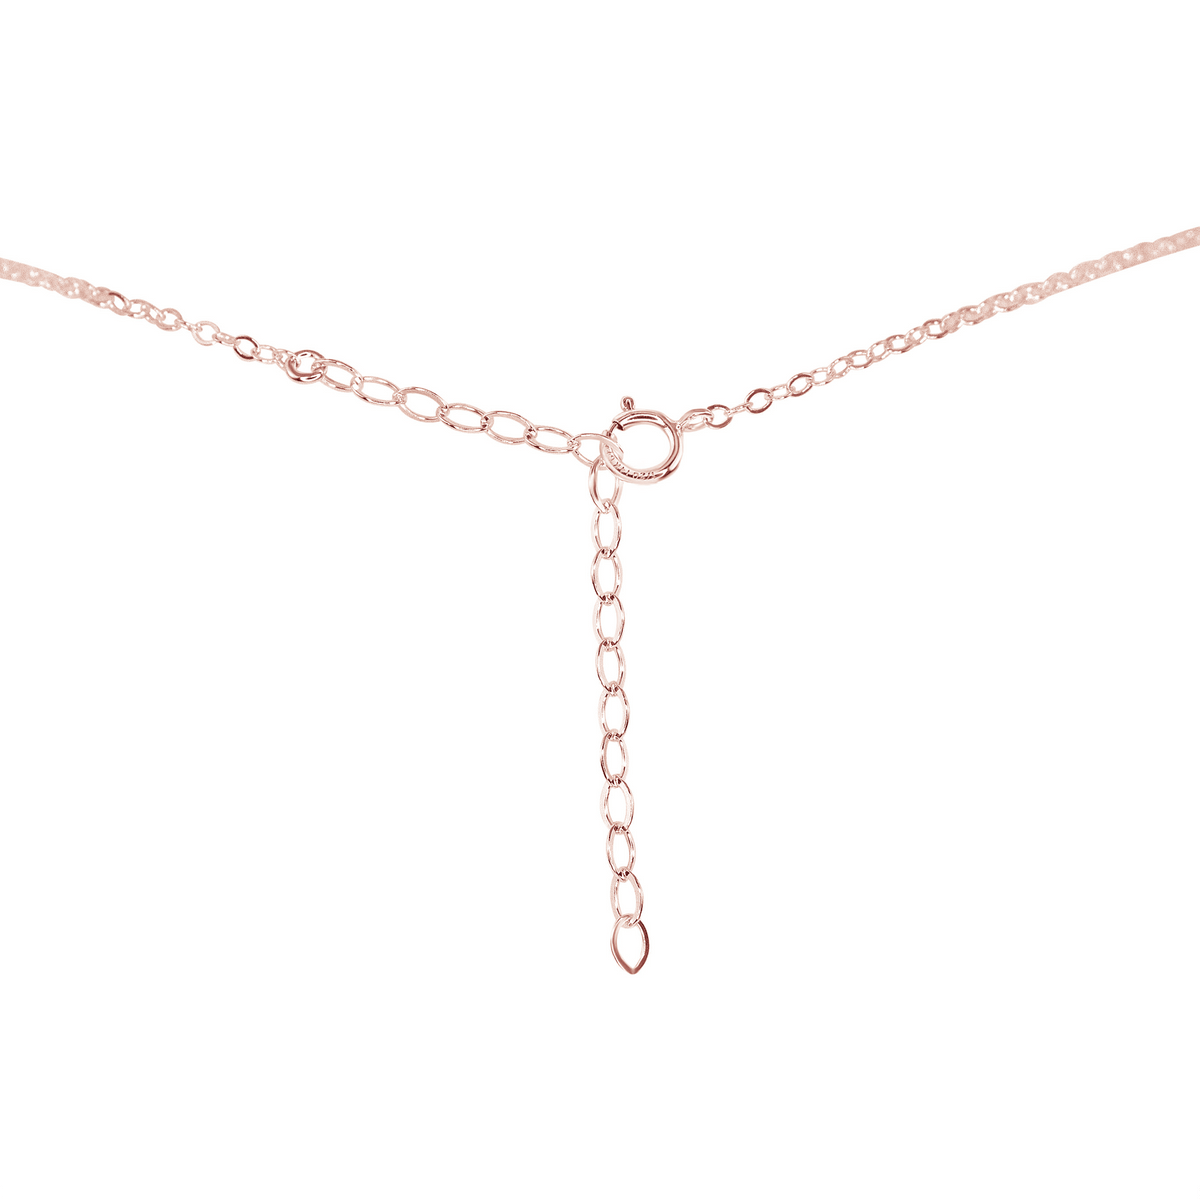 Amazonite Gemstone Chain Layered Choker Necklace